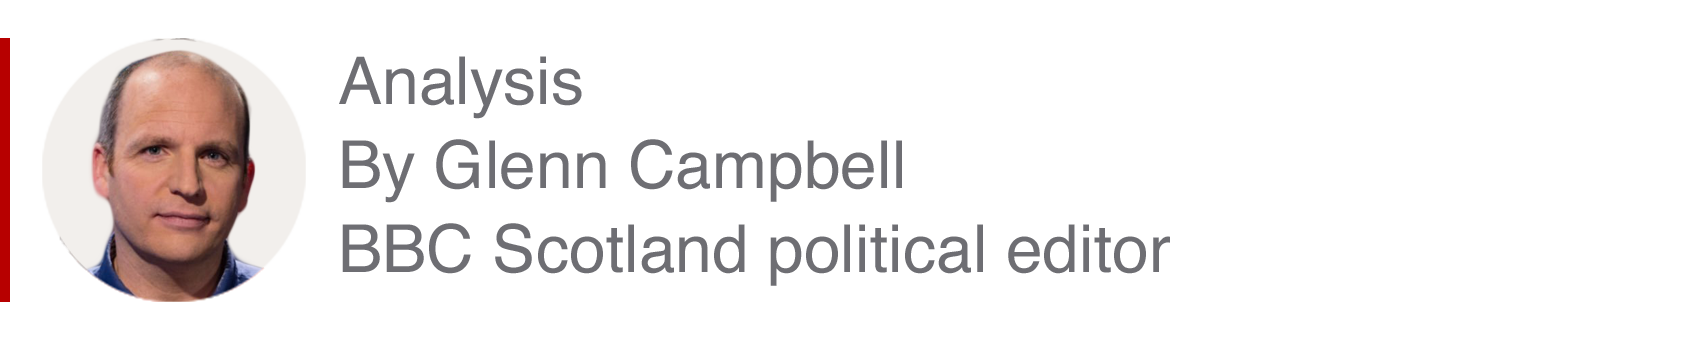 Analysis box by Glenn Campbell, BBC Scotland political editor